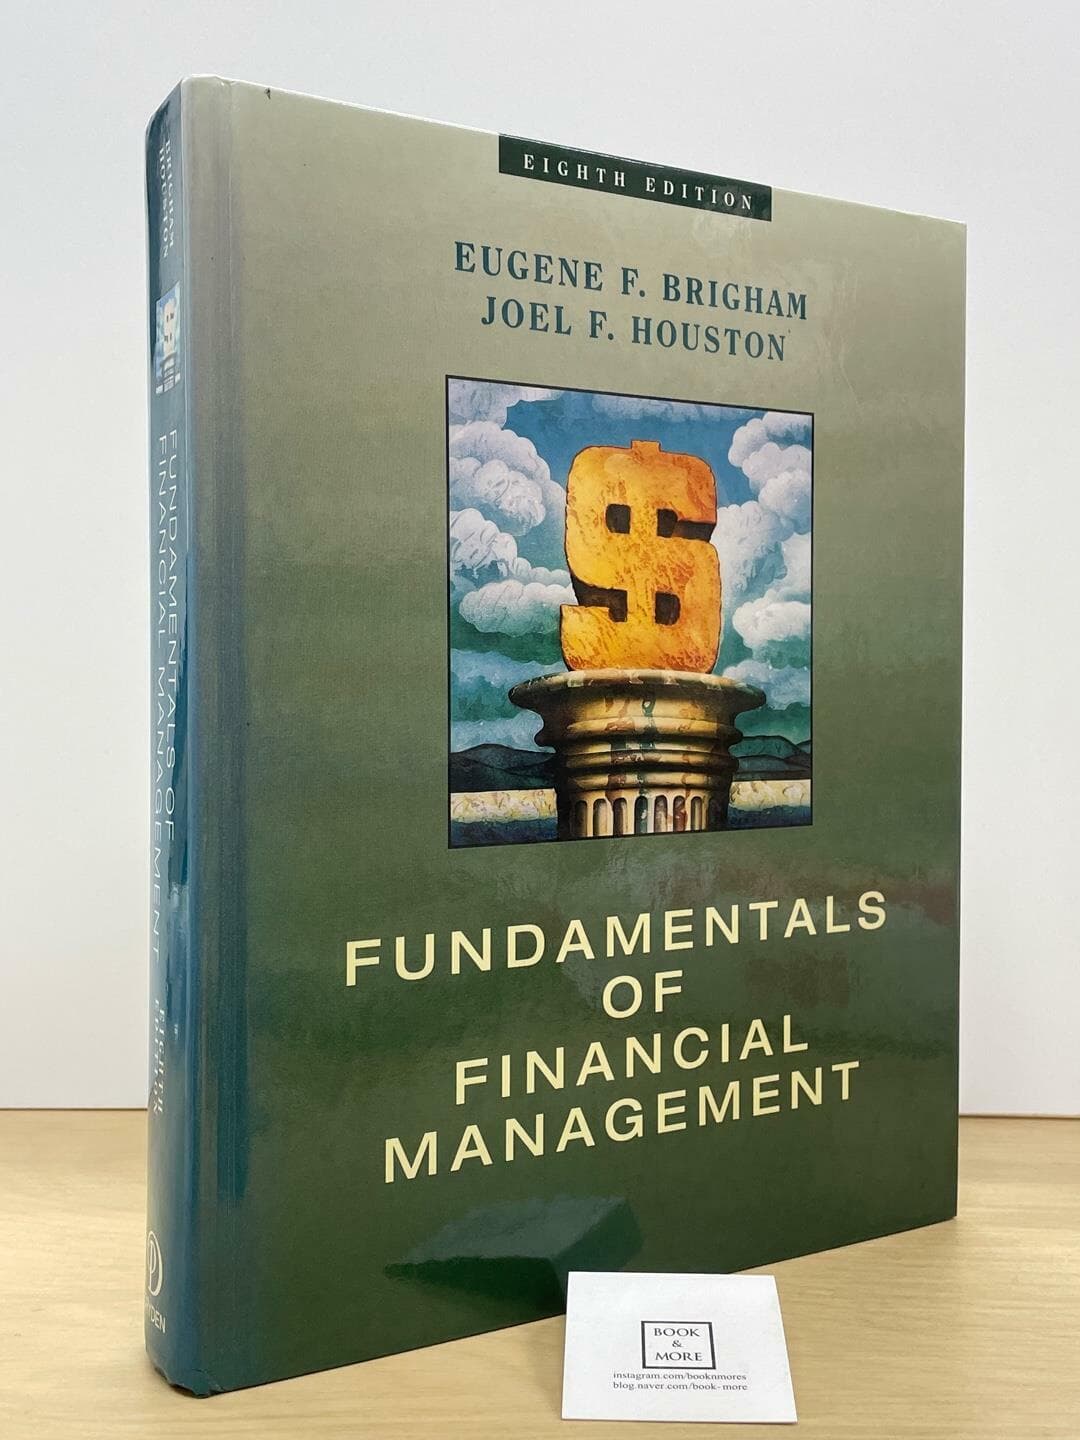 Fundamentals of Financial Management / Eugene F. Brigham  --  상태 : 최상급